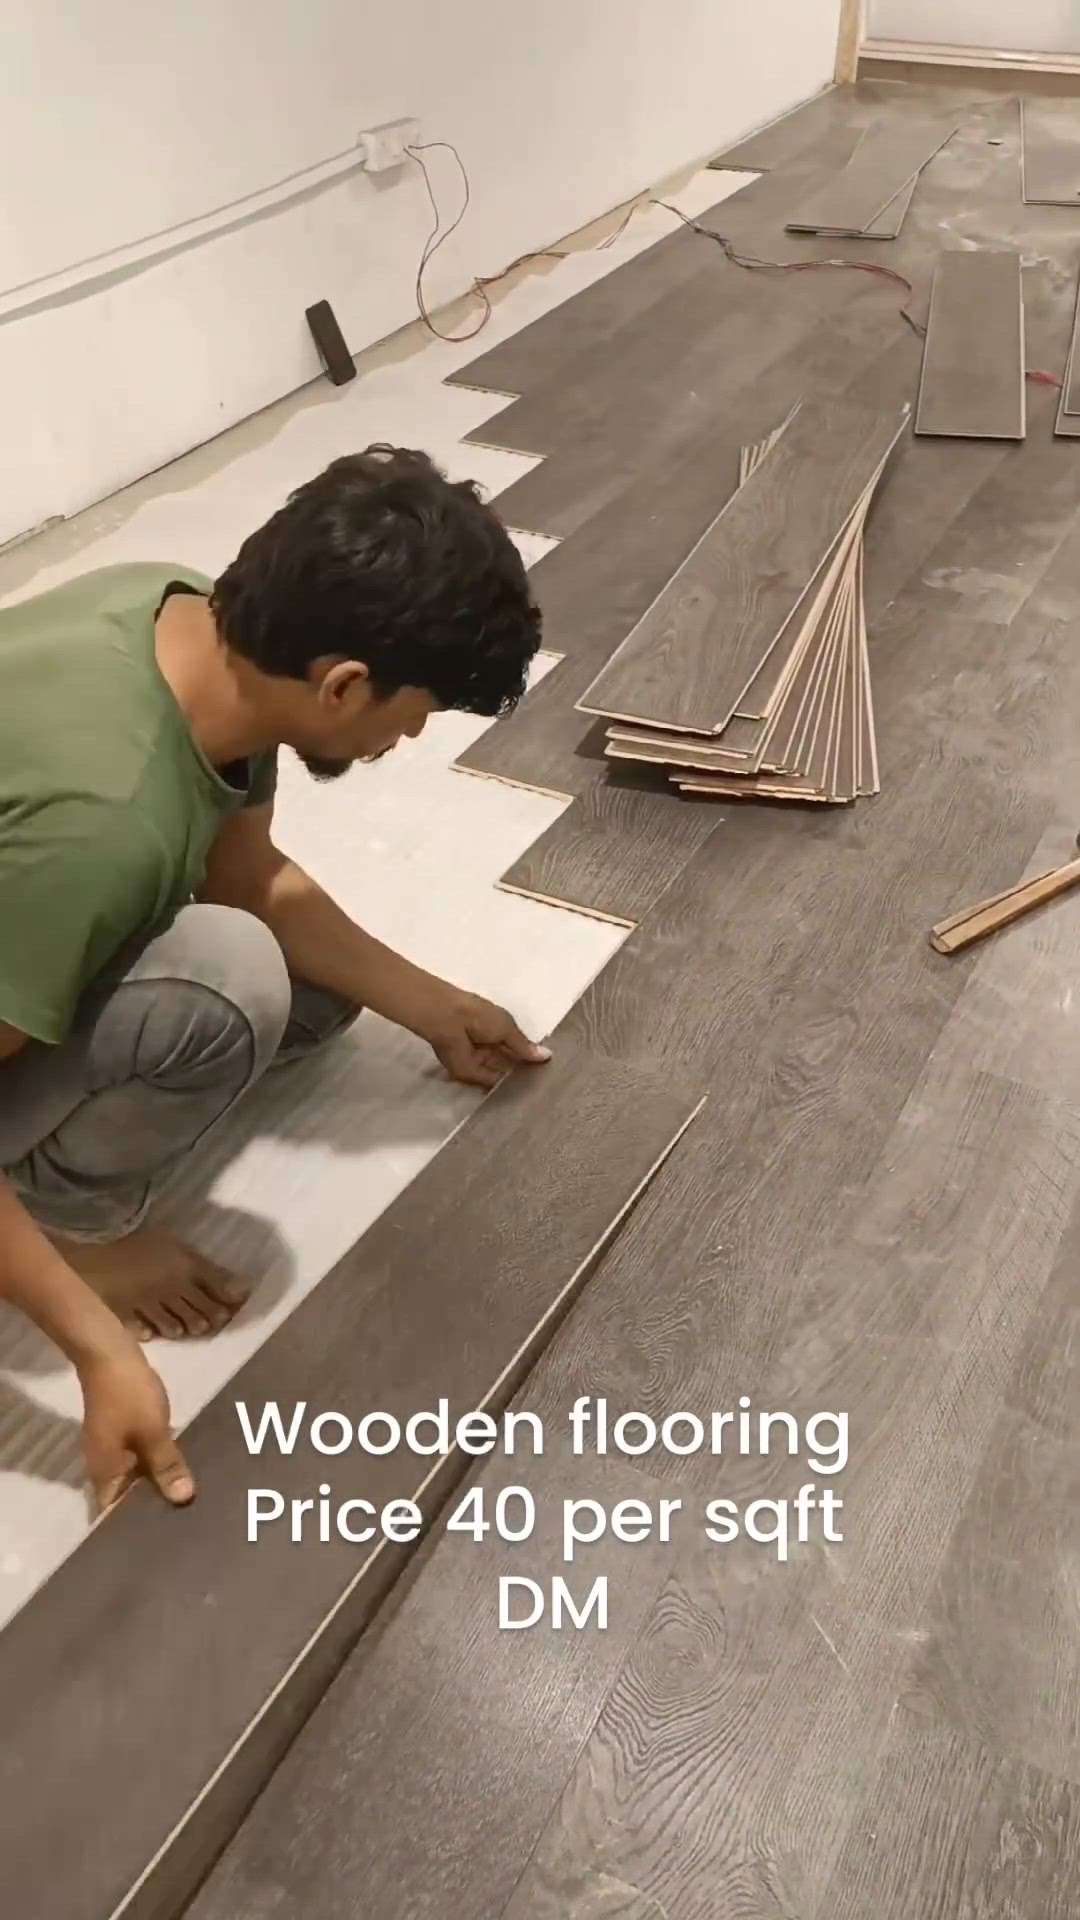 laminate wooden flooring, available at the best price, #WoodenFlooring #koloapp #inreriordesigns #FlooringSolutions #FlooringServices